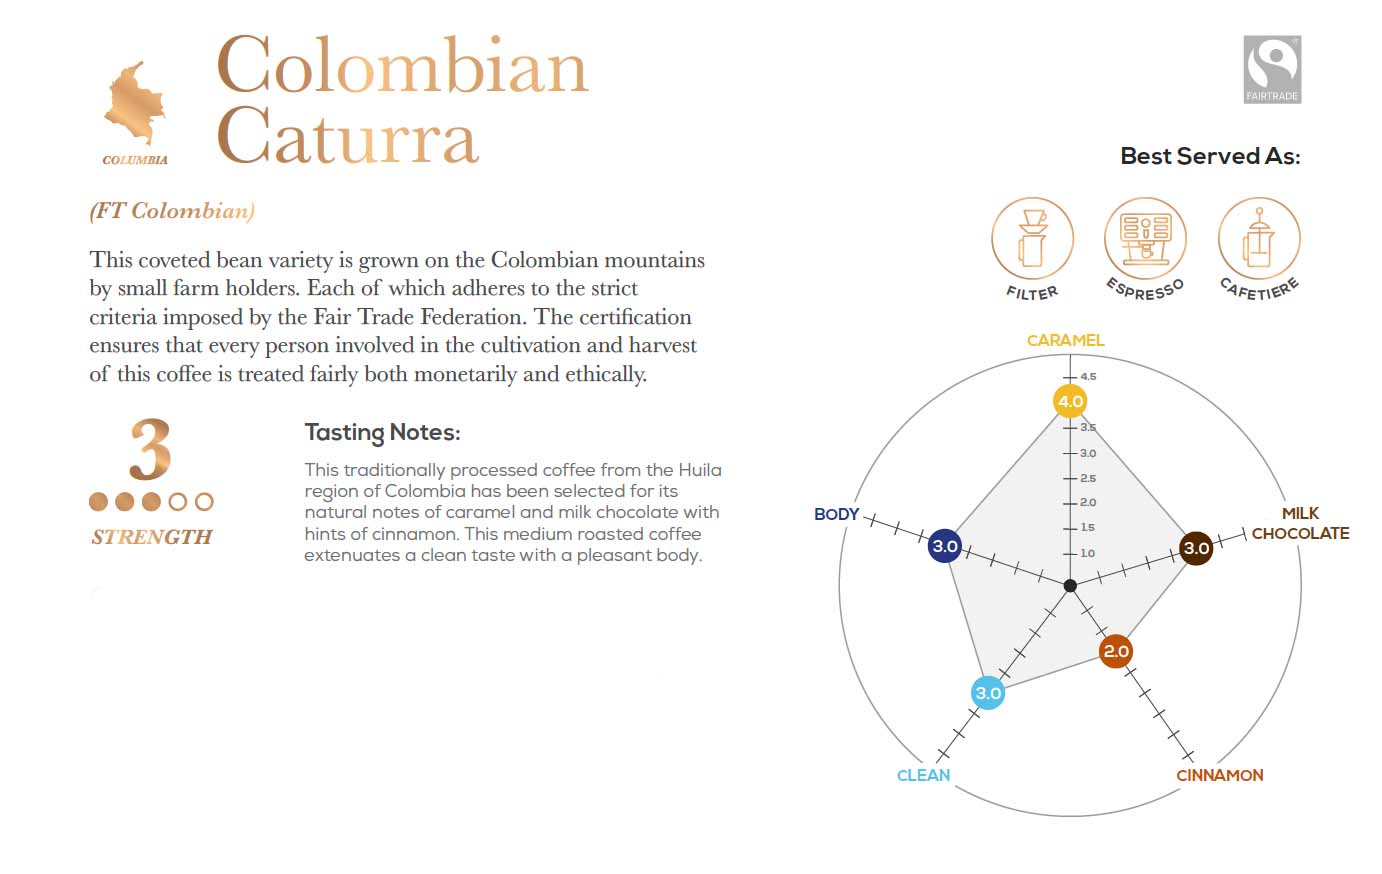 COLOMBIAN CATURRA aka. Fairtrade Colombia